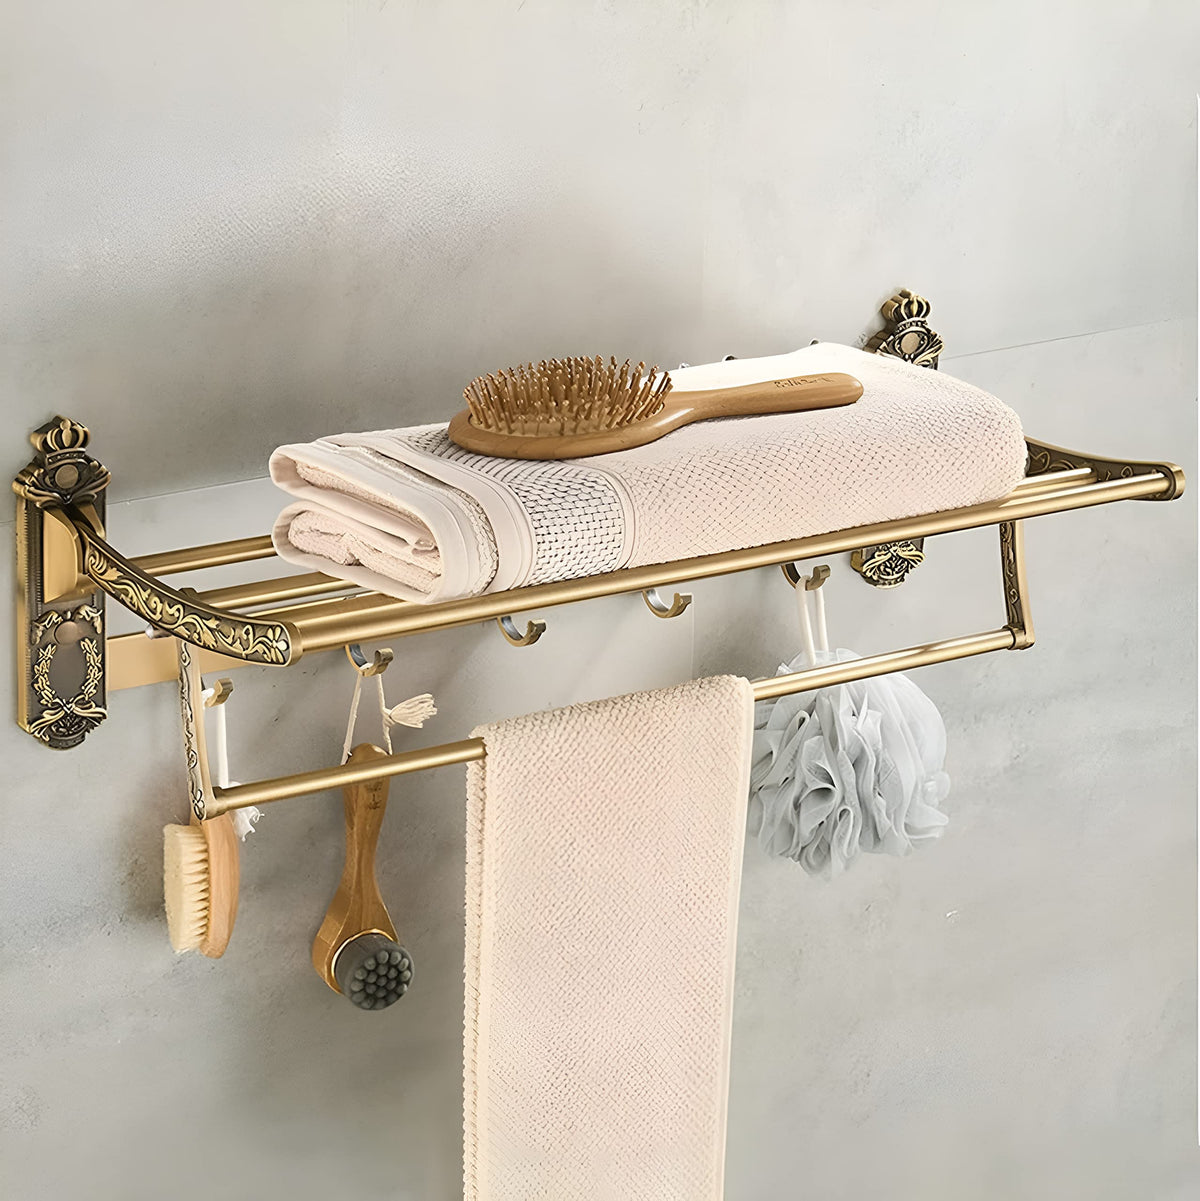 Plantex Antique Aluminum Folding Towel Rack for Bathroom/Folding Towel Stand/Hanger/Bathroom Accessories (24 Inch)